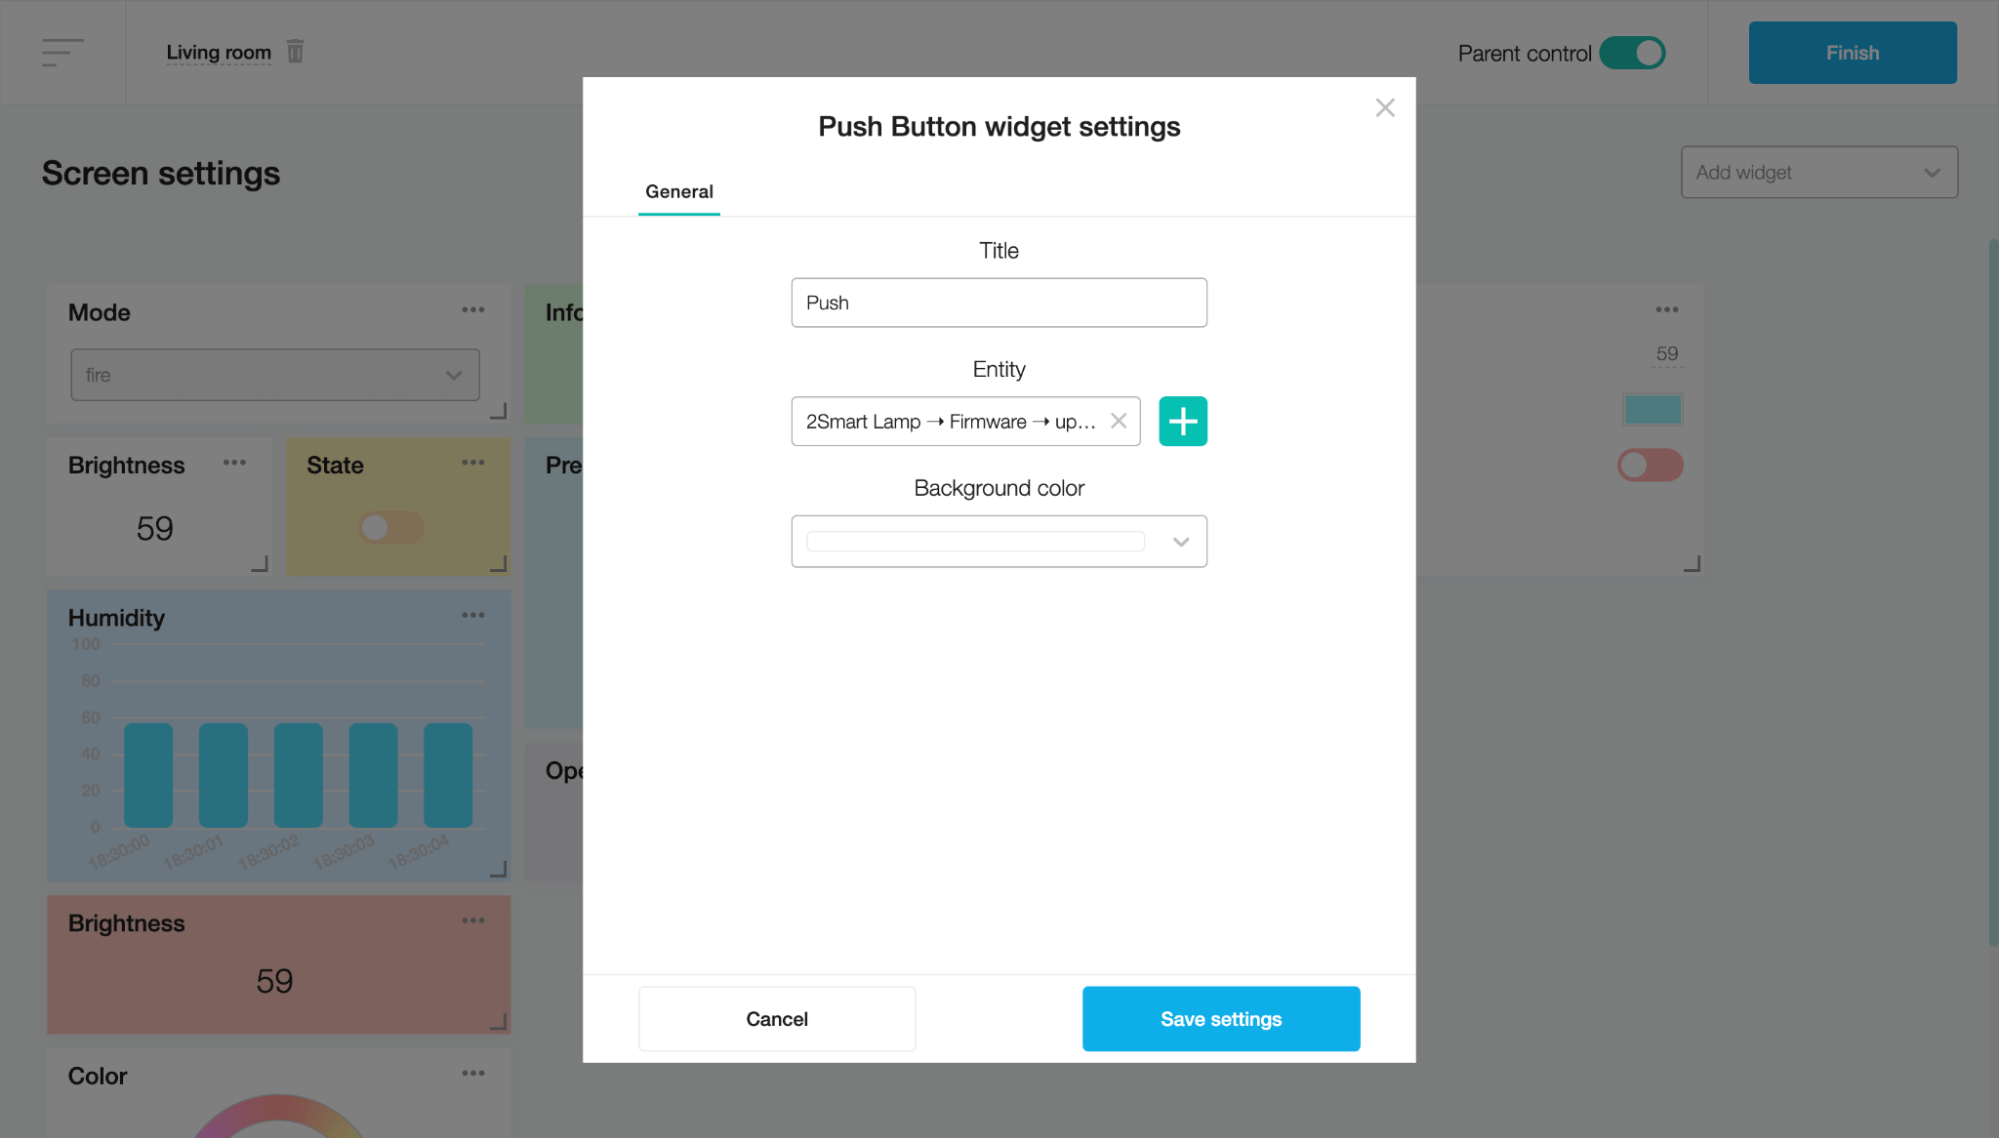 Push button widget settings